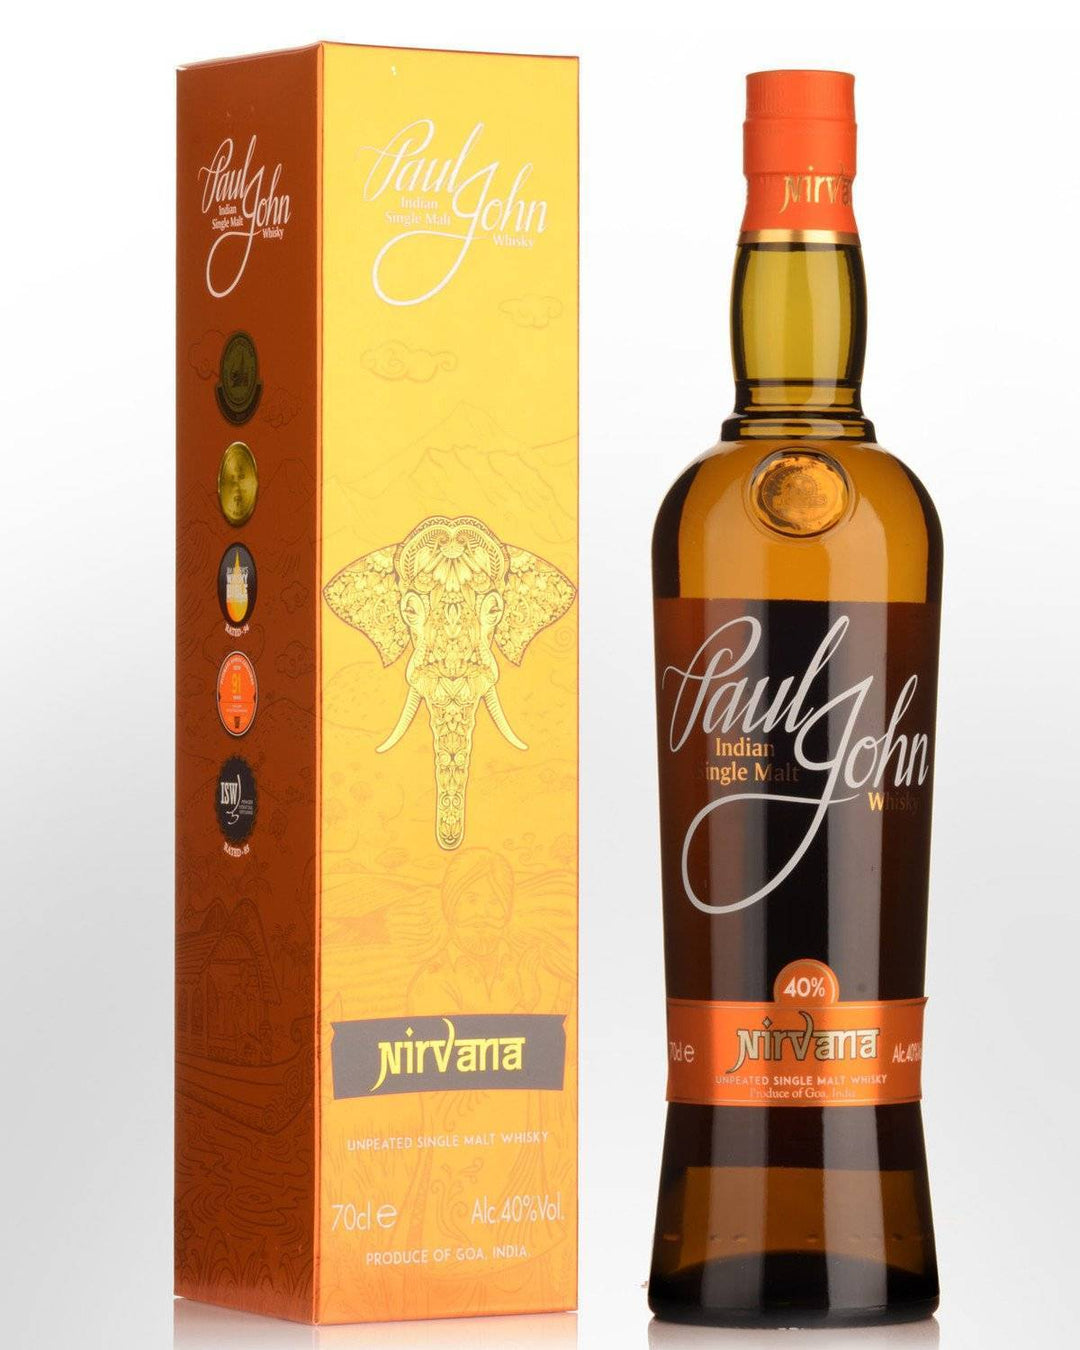 Paul John Nirvana Indian Single Malt Whisky (700ml)